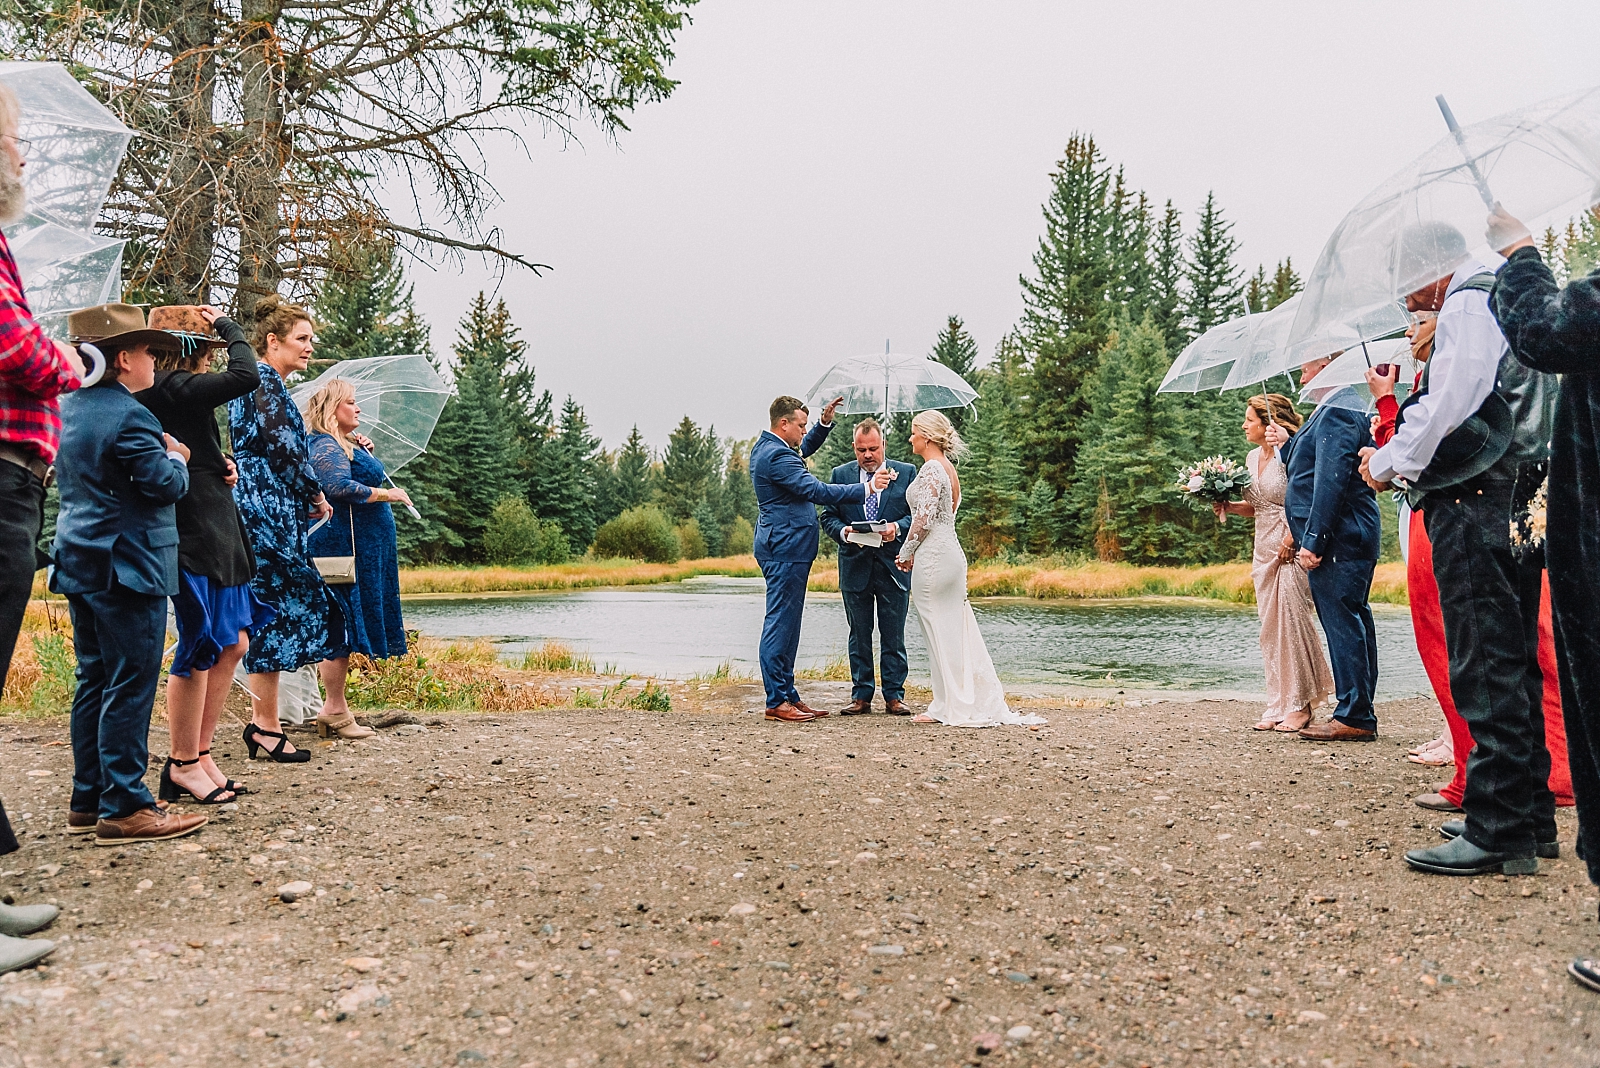 Jackson Hole Small Wedding, Rainy wedding ceremony at Schwabacher's Landing, Grand Teton National Park Wedding, Elopement photos